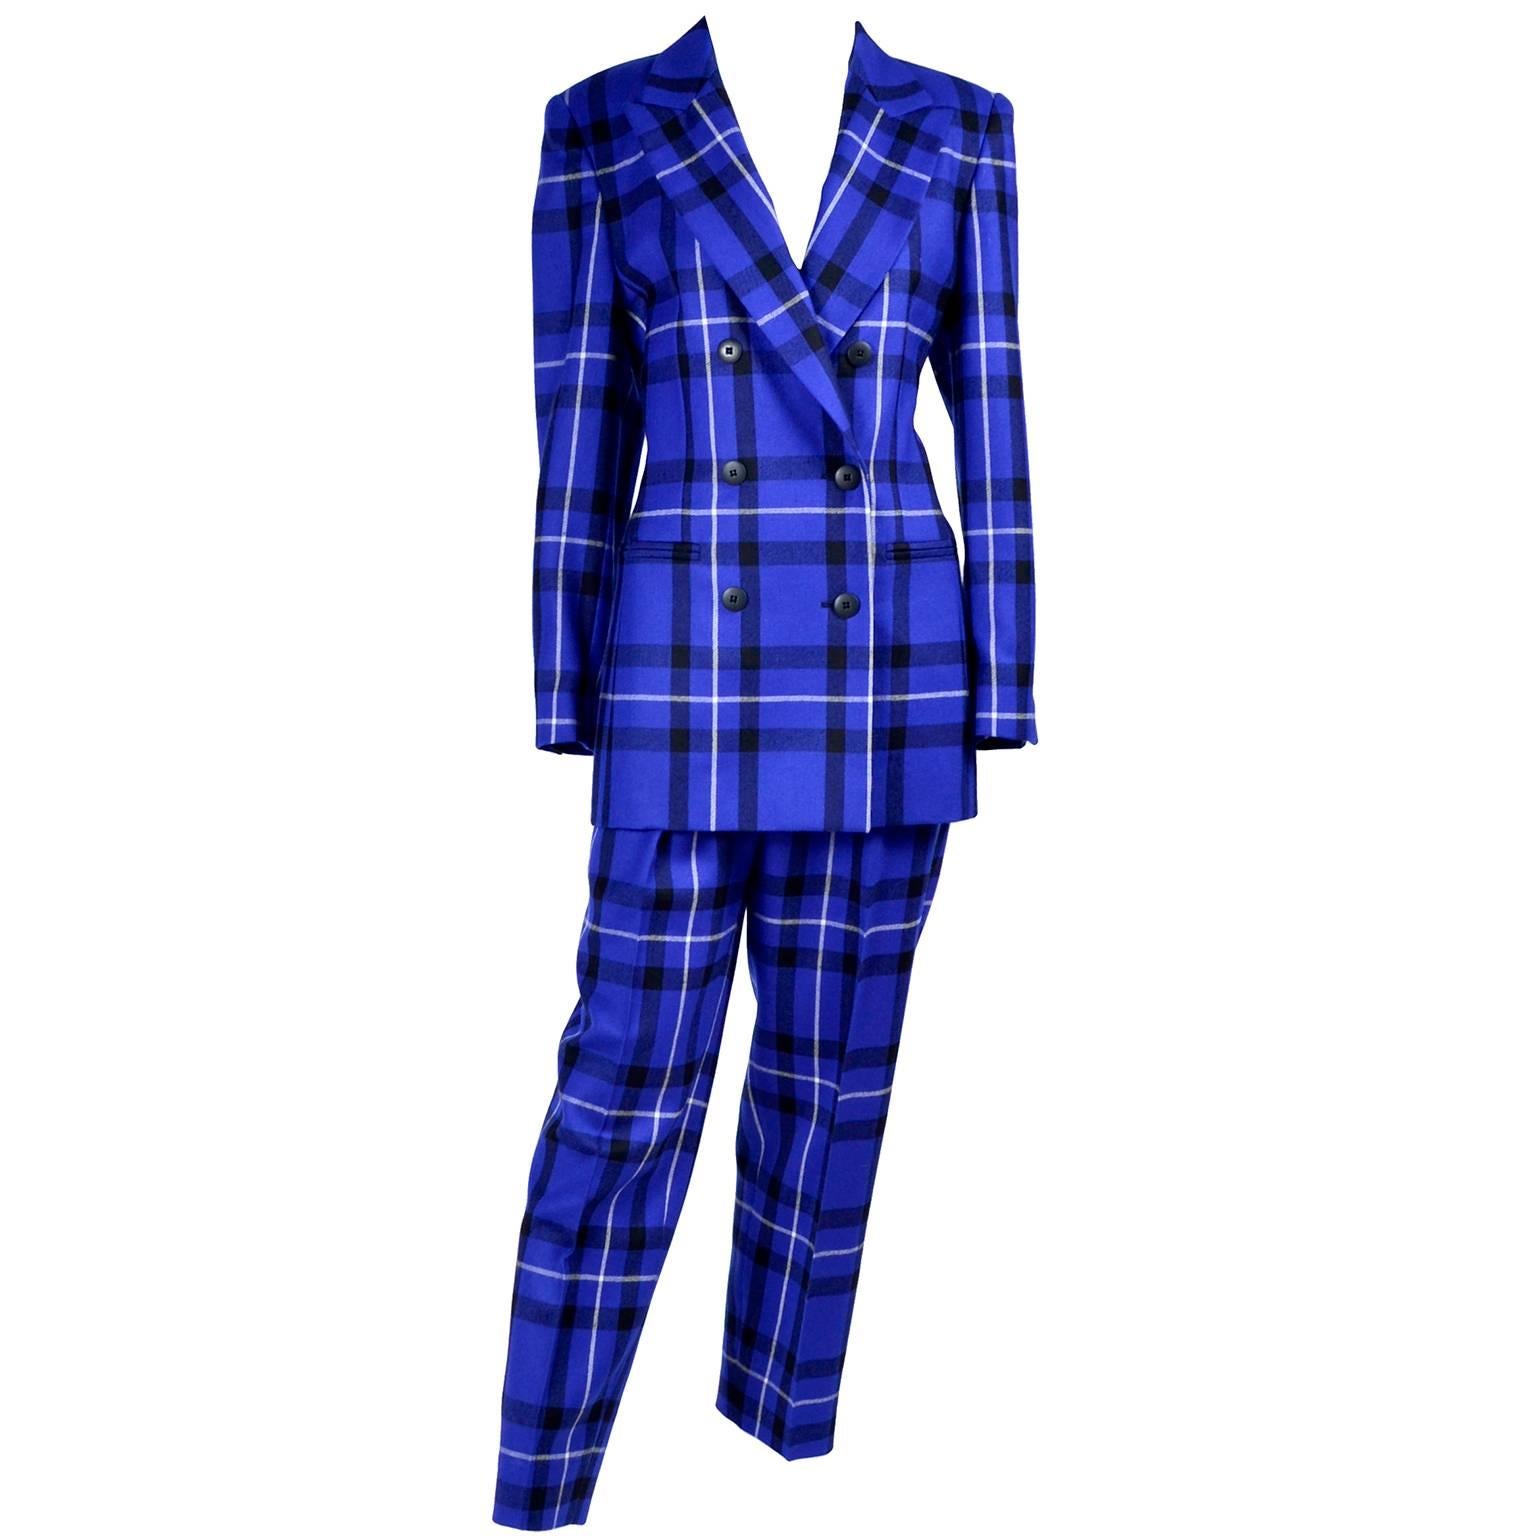 Women's Escada Pantsuit in Blue Plaid Wool w/ Trousers & Blazer Jacket by Margaretha Ley